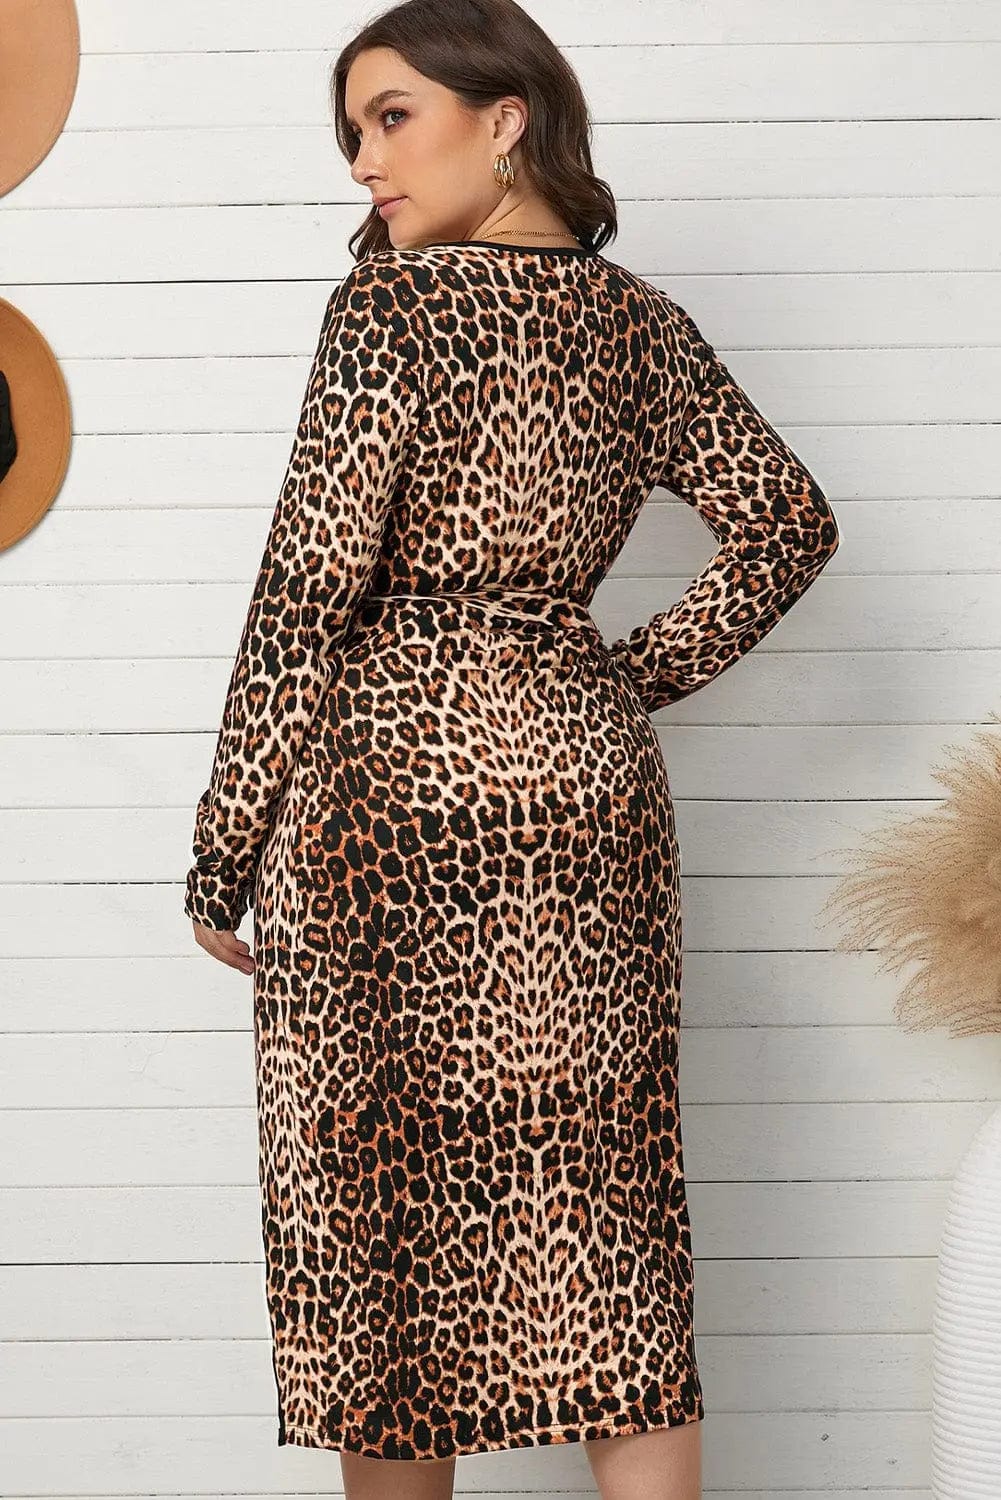 Plus Size Leopard Belted Surplice Wrap Dress  39.00 MPGD Corp Merchandise